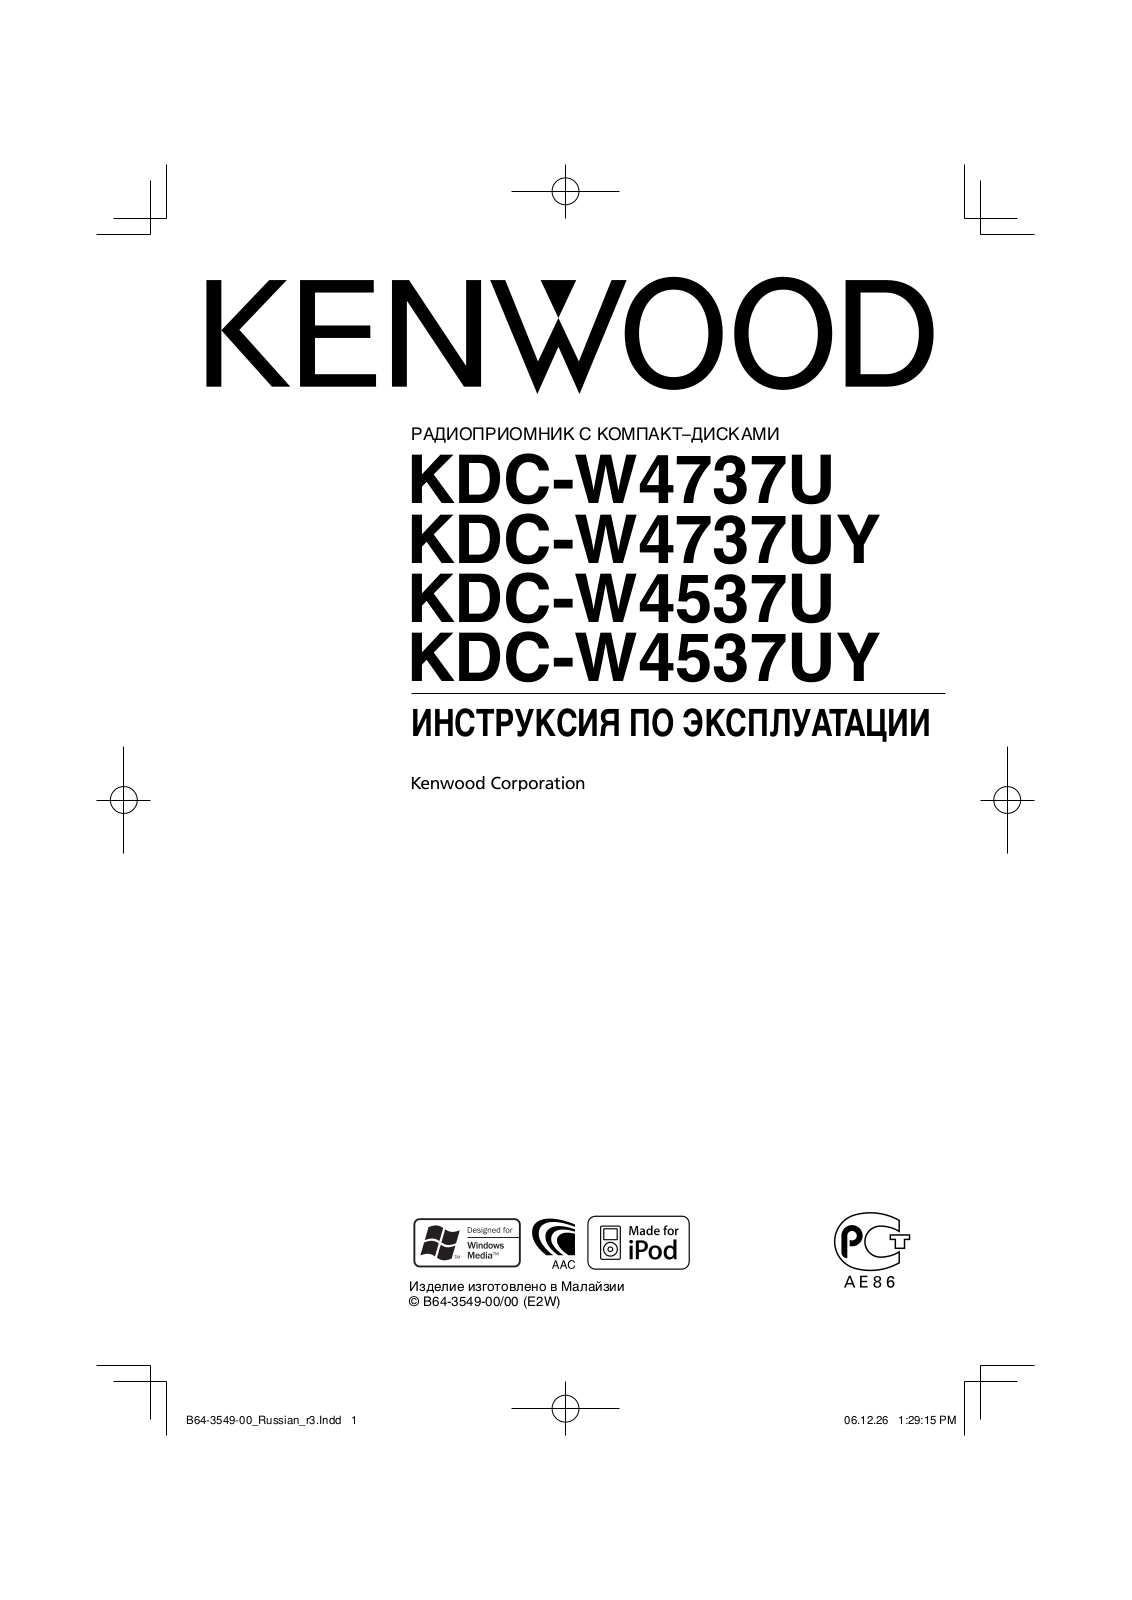 Kenwood KDC-W4737UY User Manual